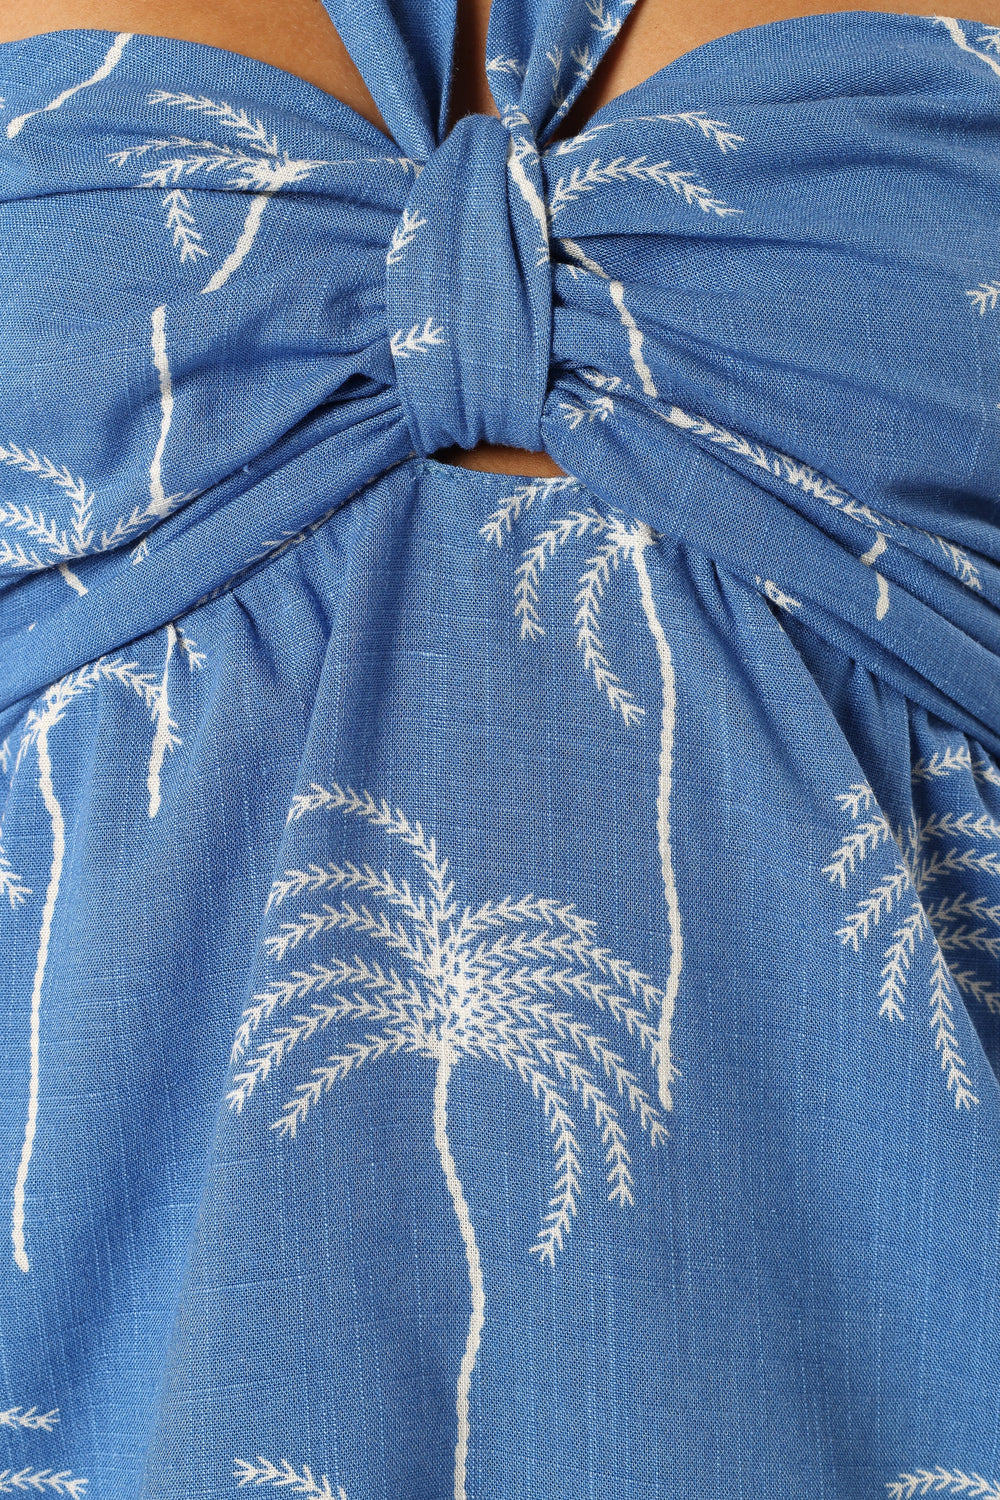 TOPS @Amira Strapless Top - Blue Palm Print